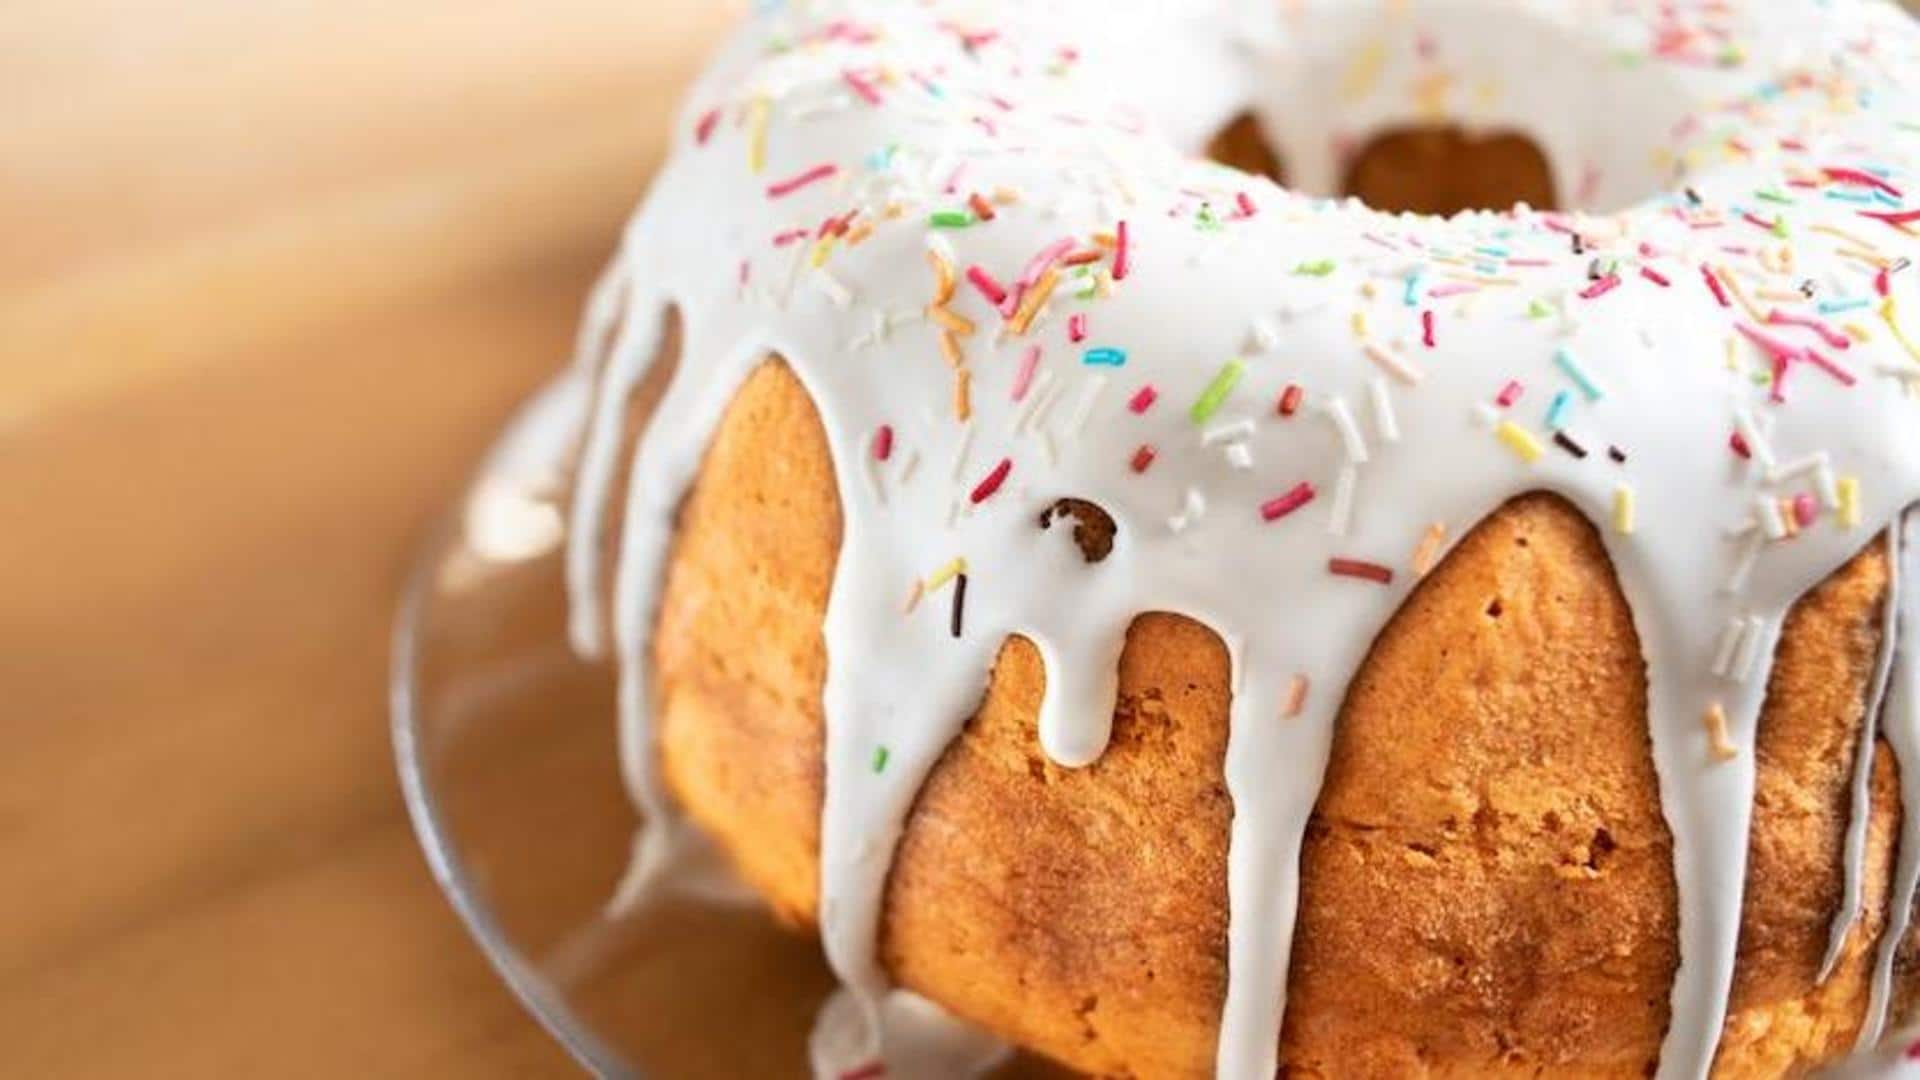 On National Bundt Day, try this classic vanilla bundt cake